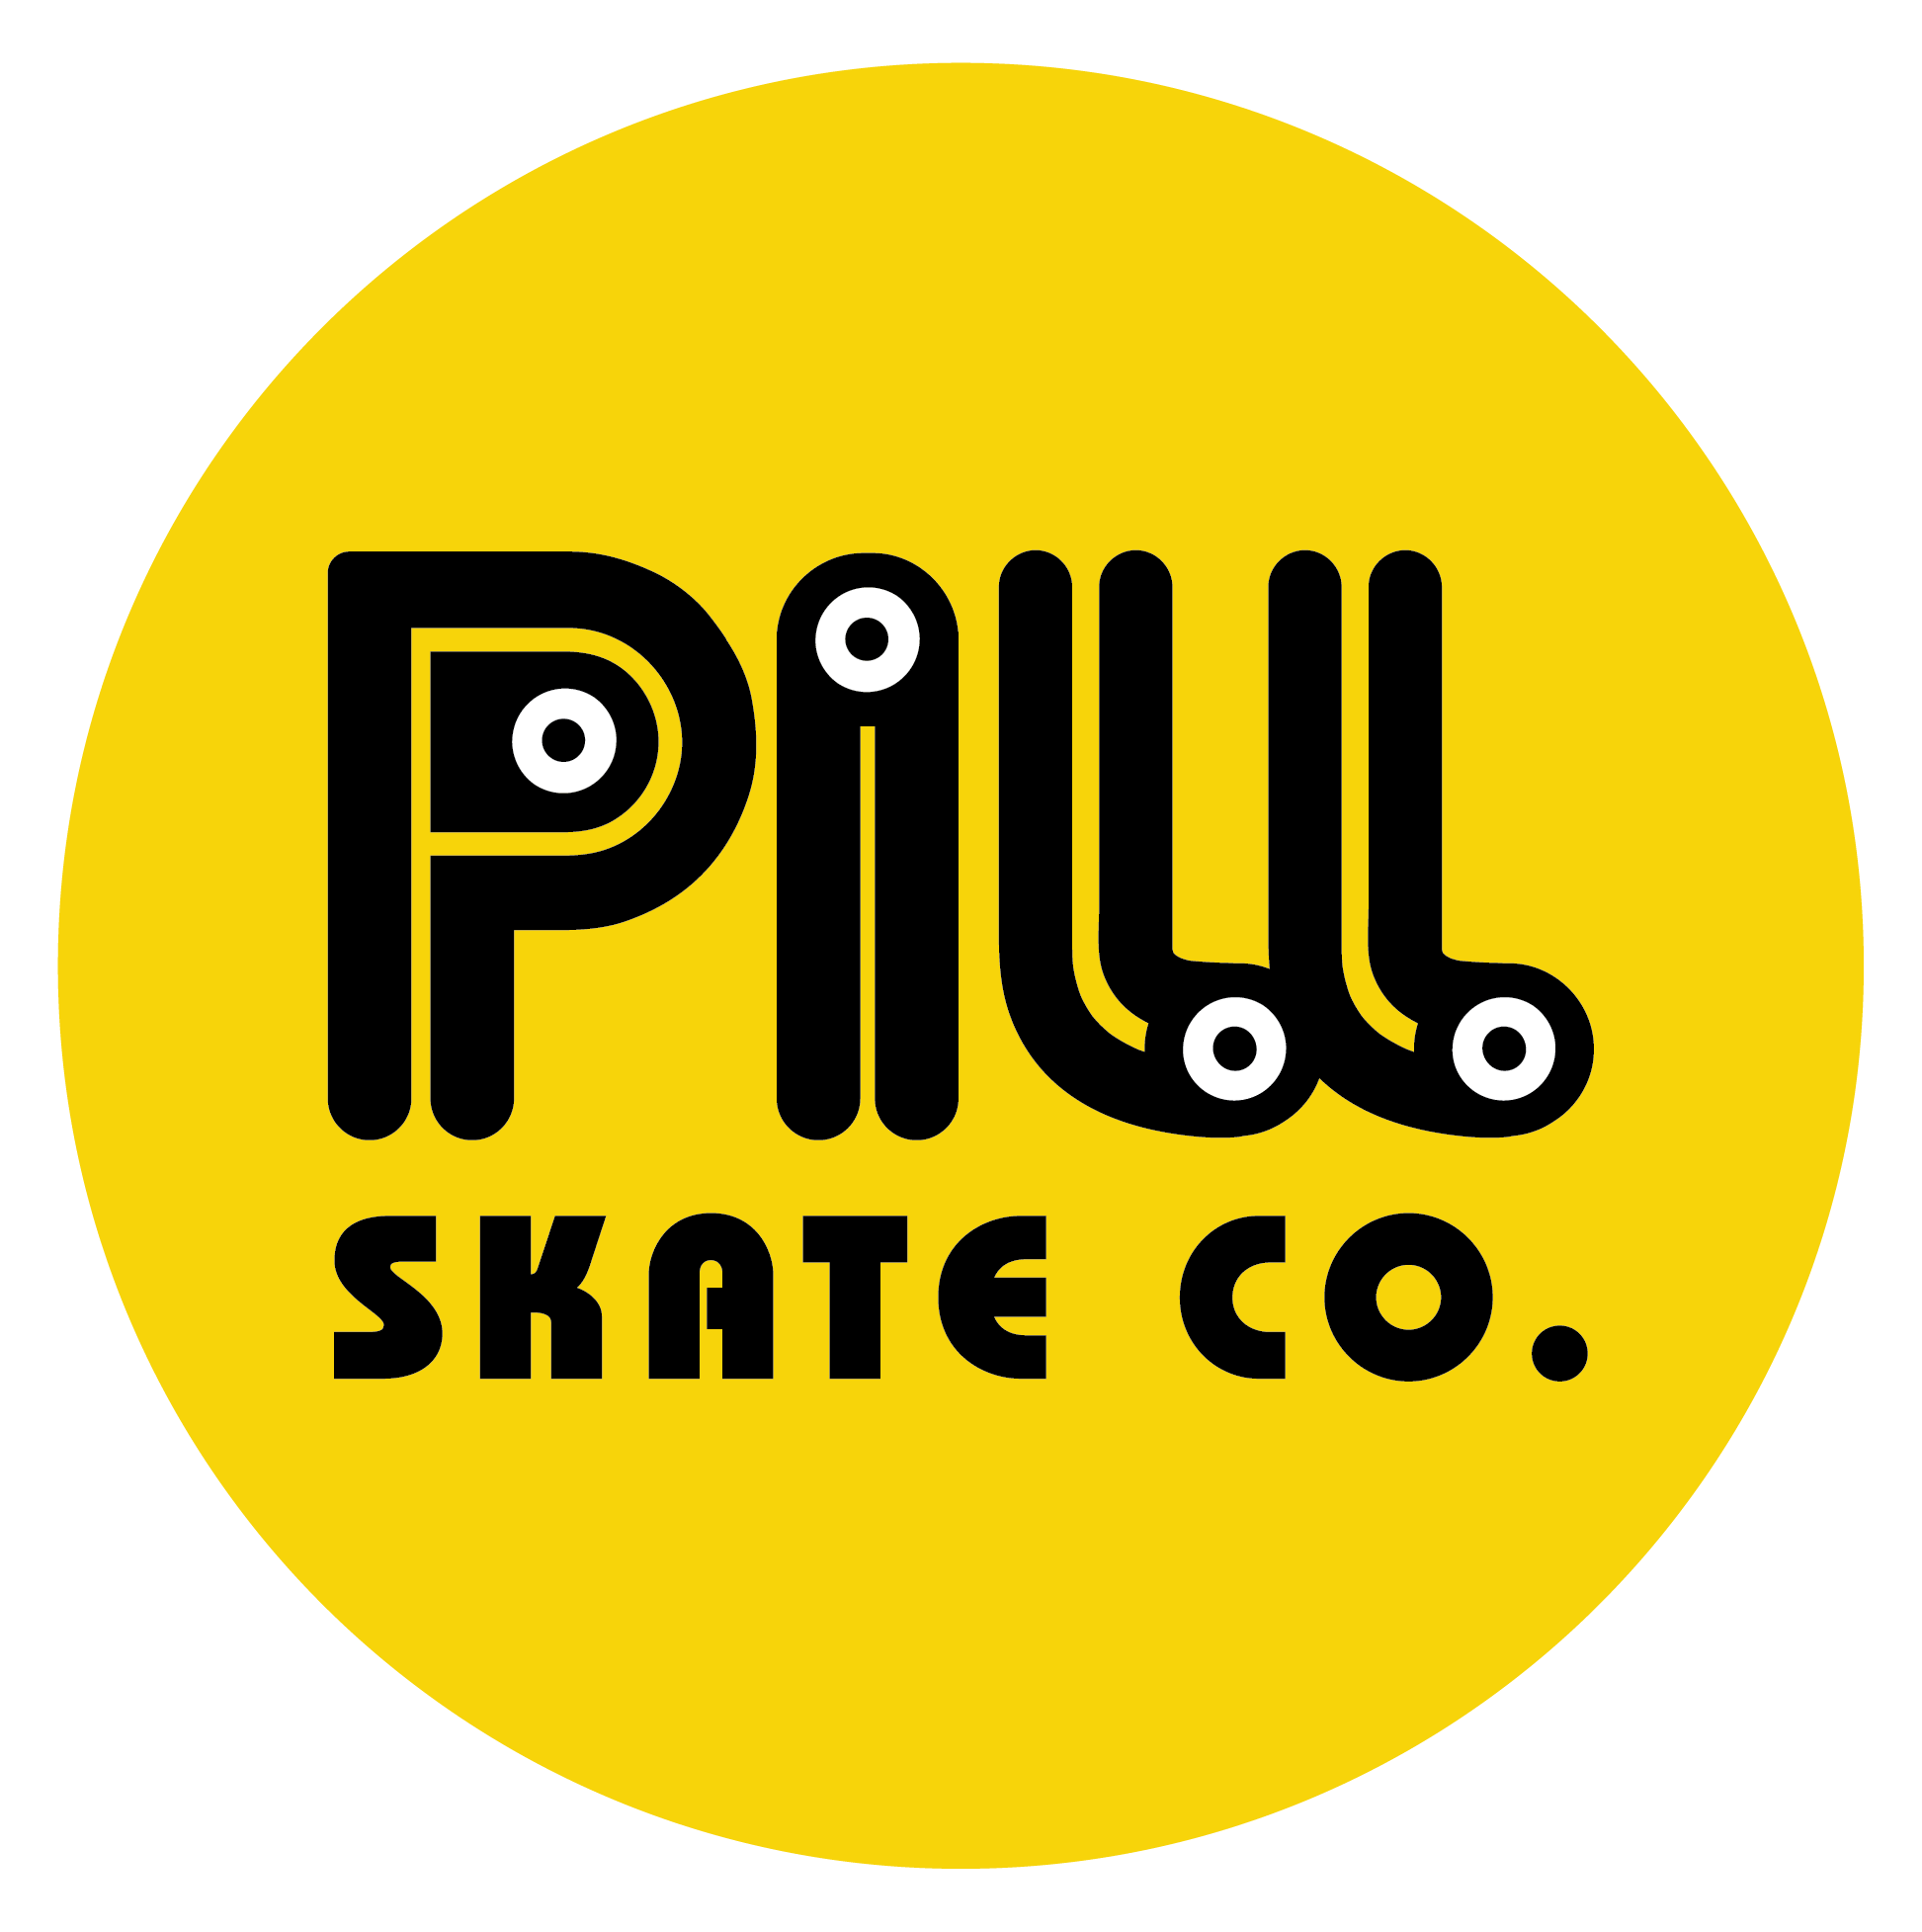 The Pill Skateboard Co.